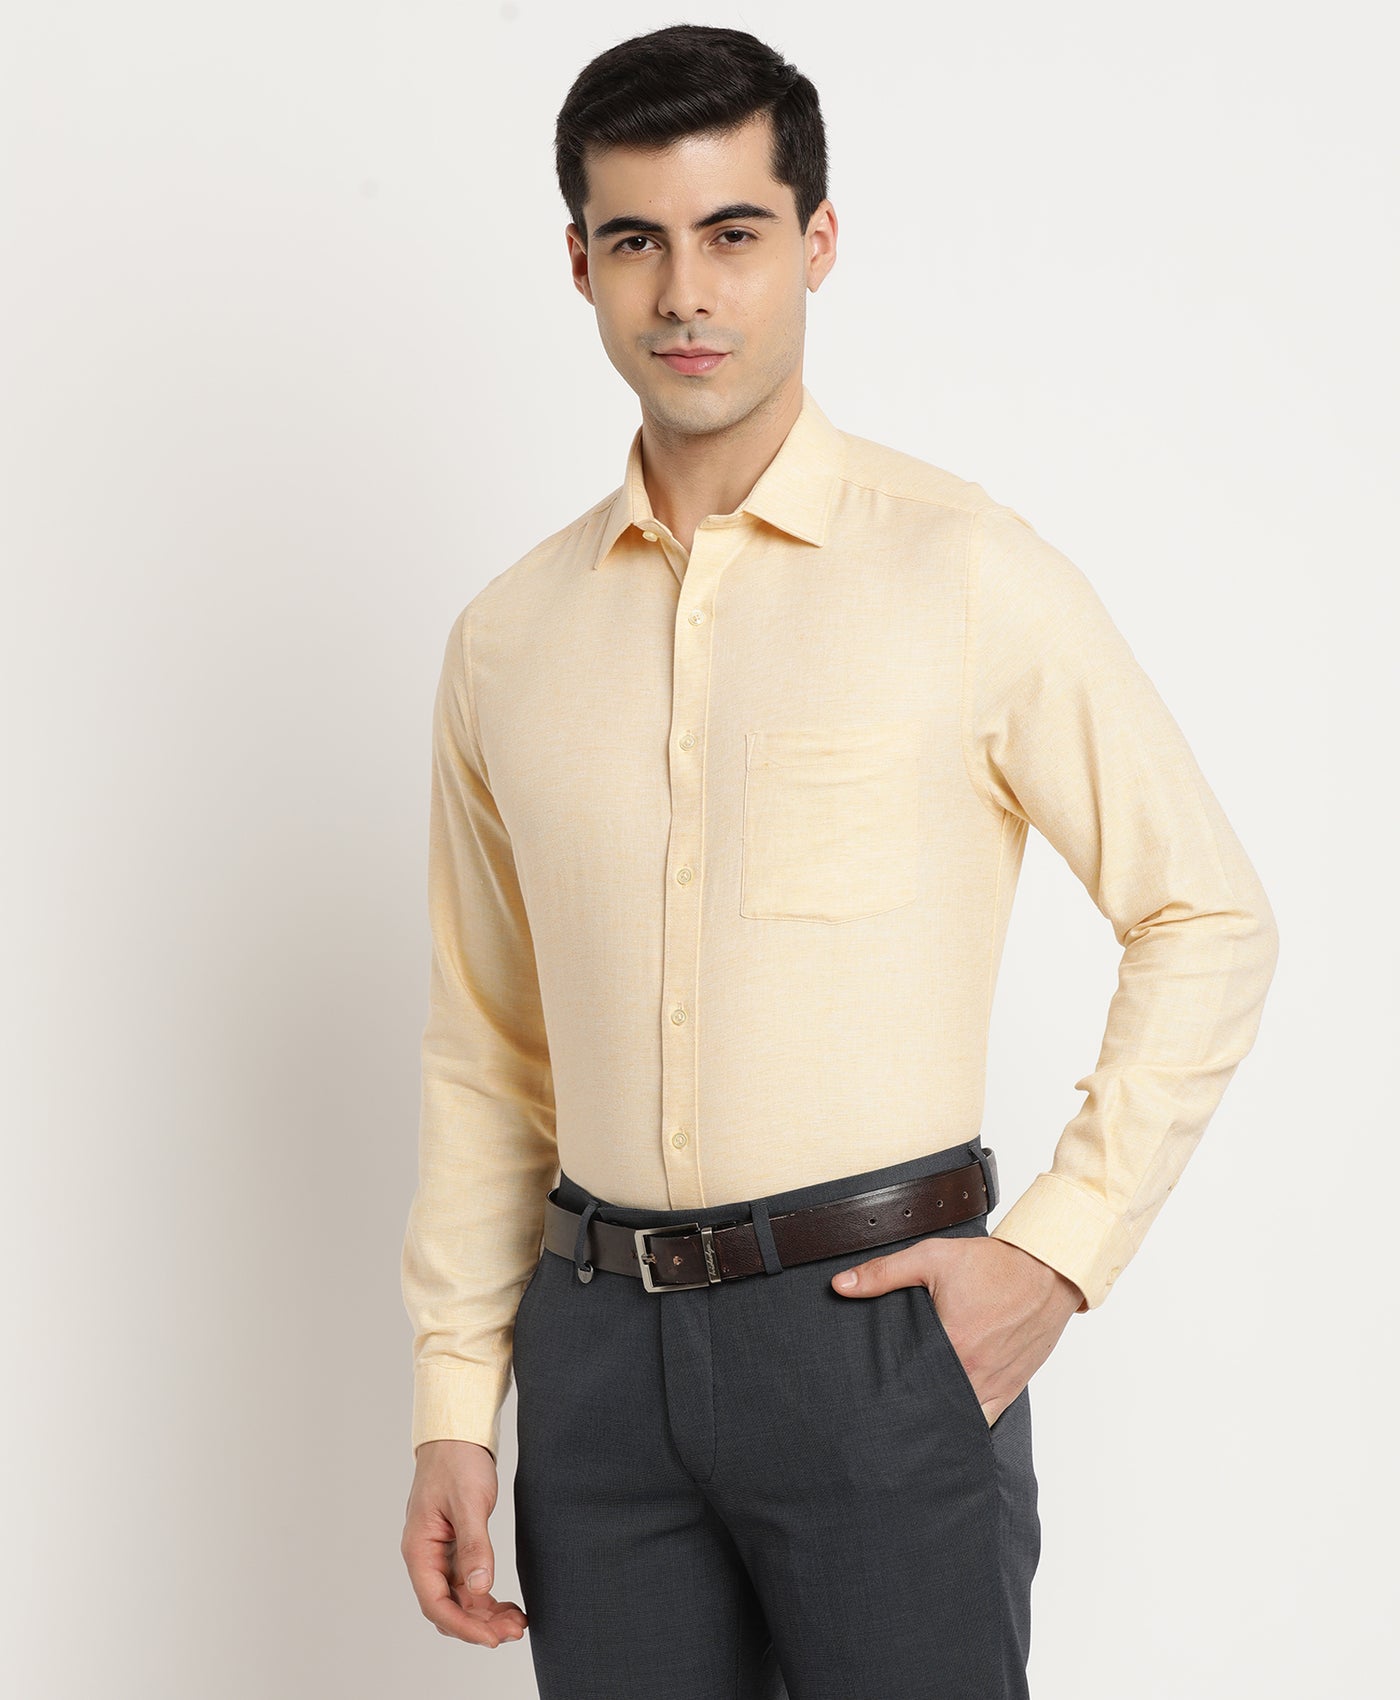 100% Cotton Yellow Plain Slim Fit Full Sleeve Formal Shirt